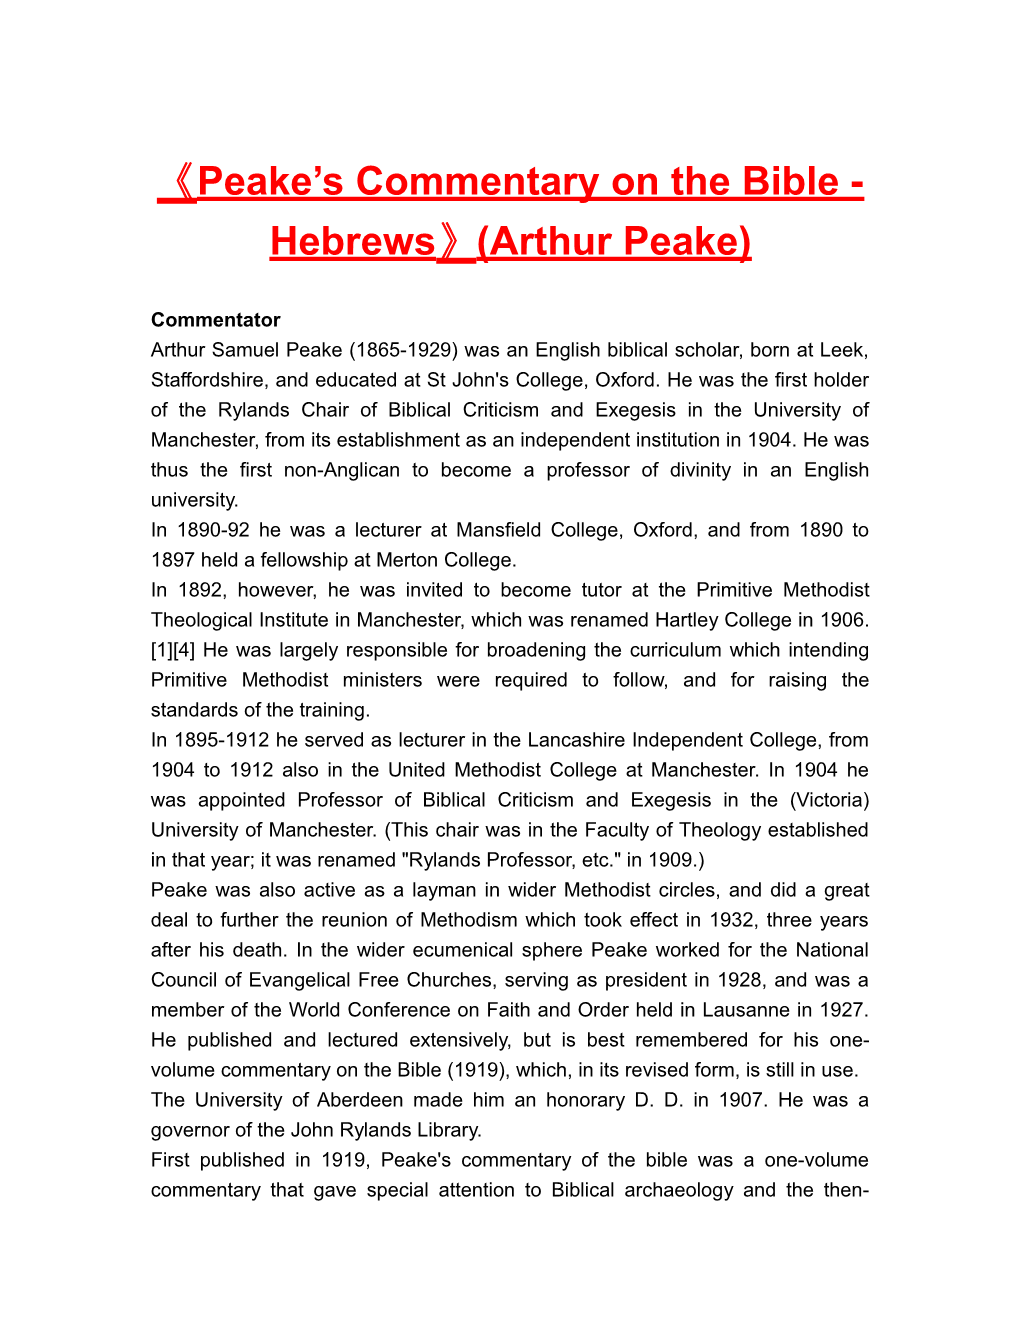 Peake S Commentary on the Bible - Hebrews (Arthur Peake)